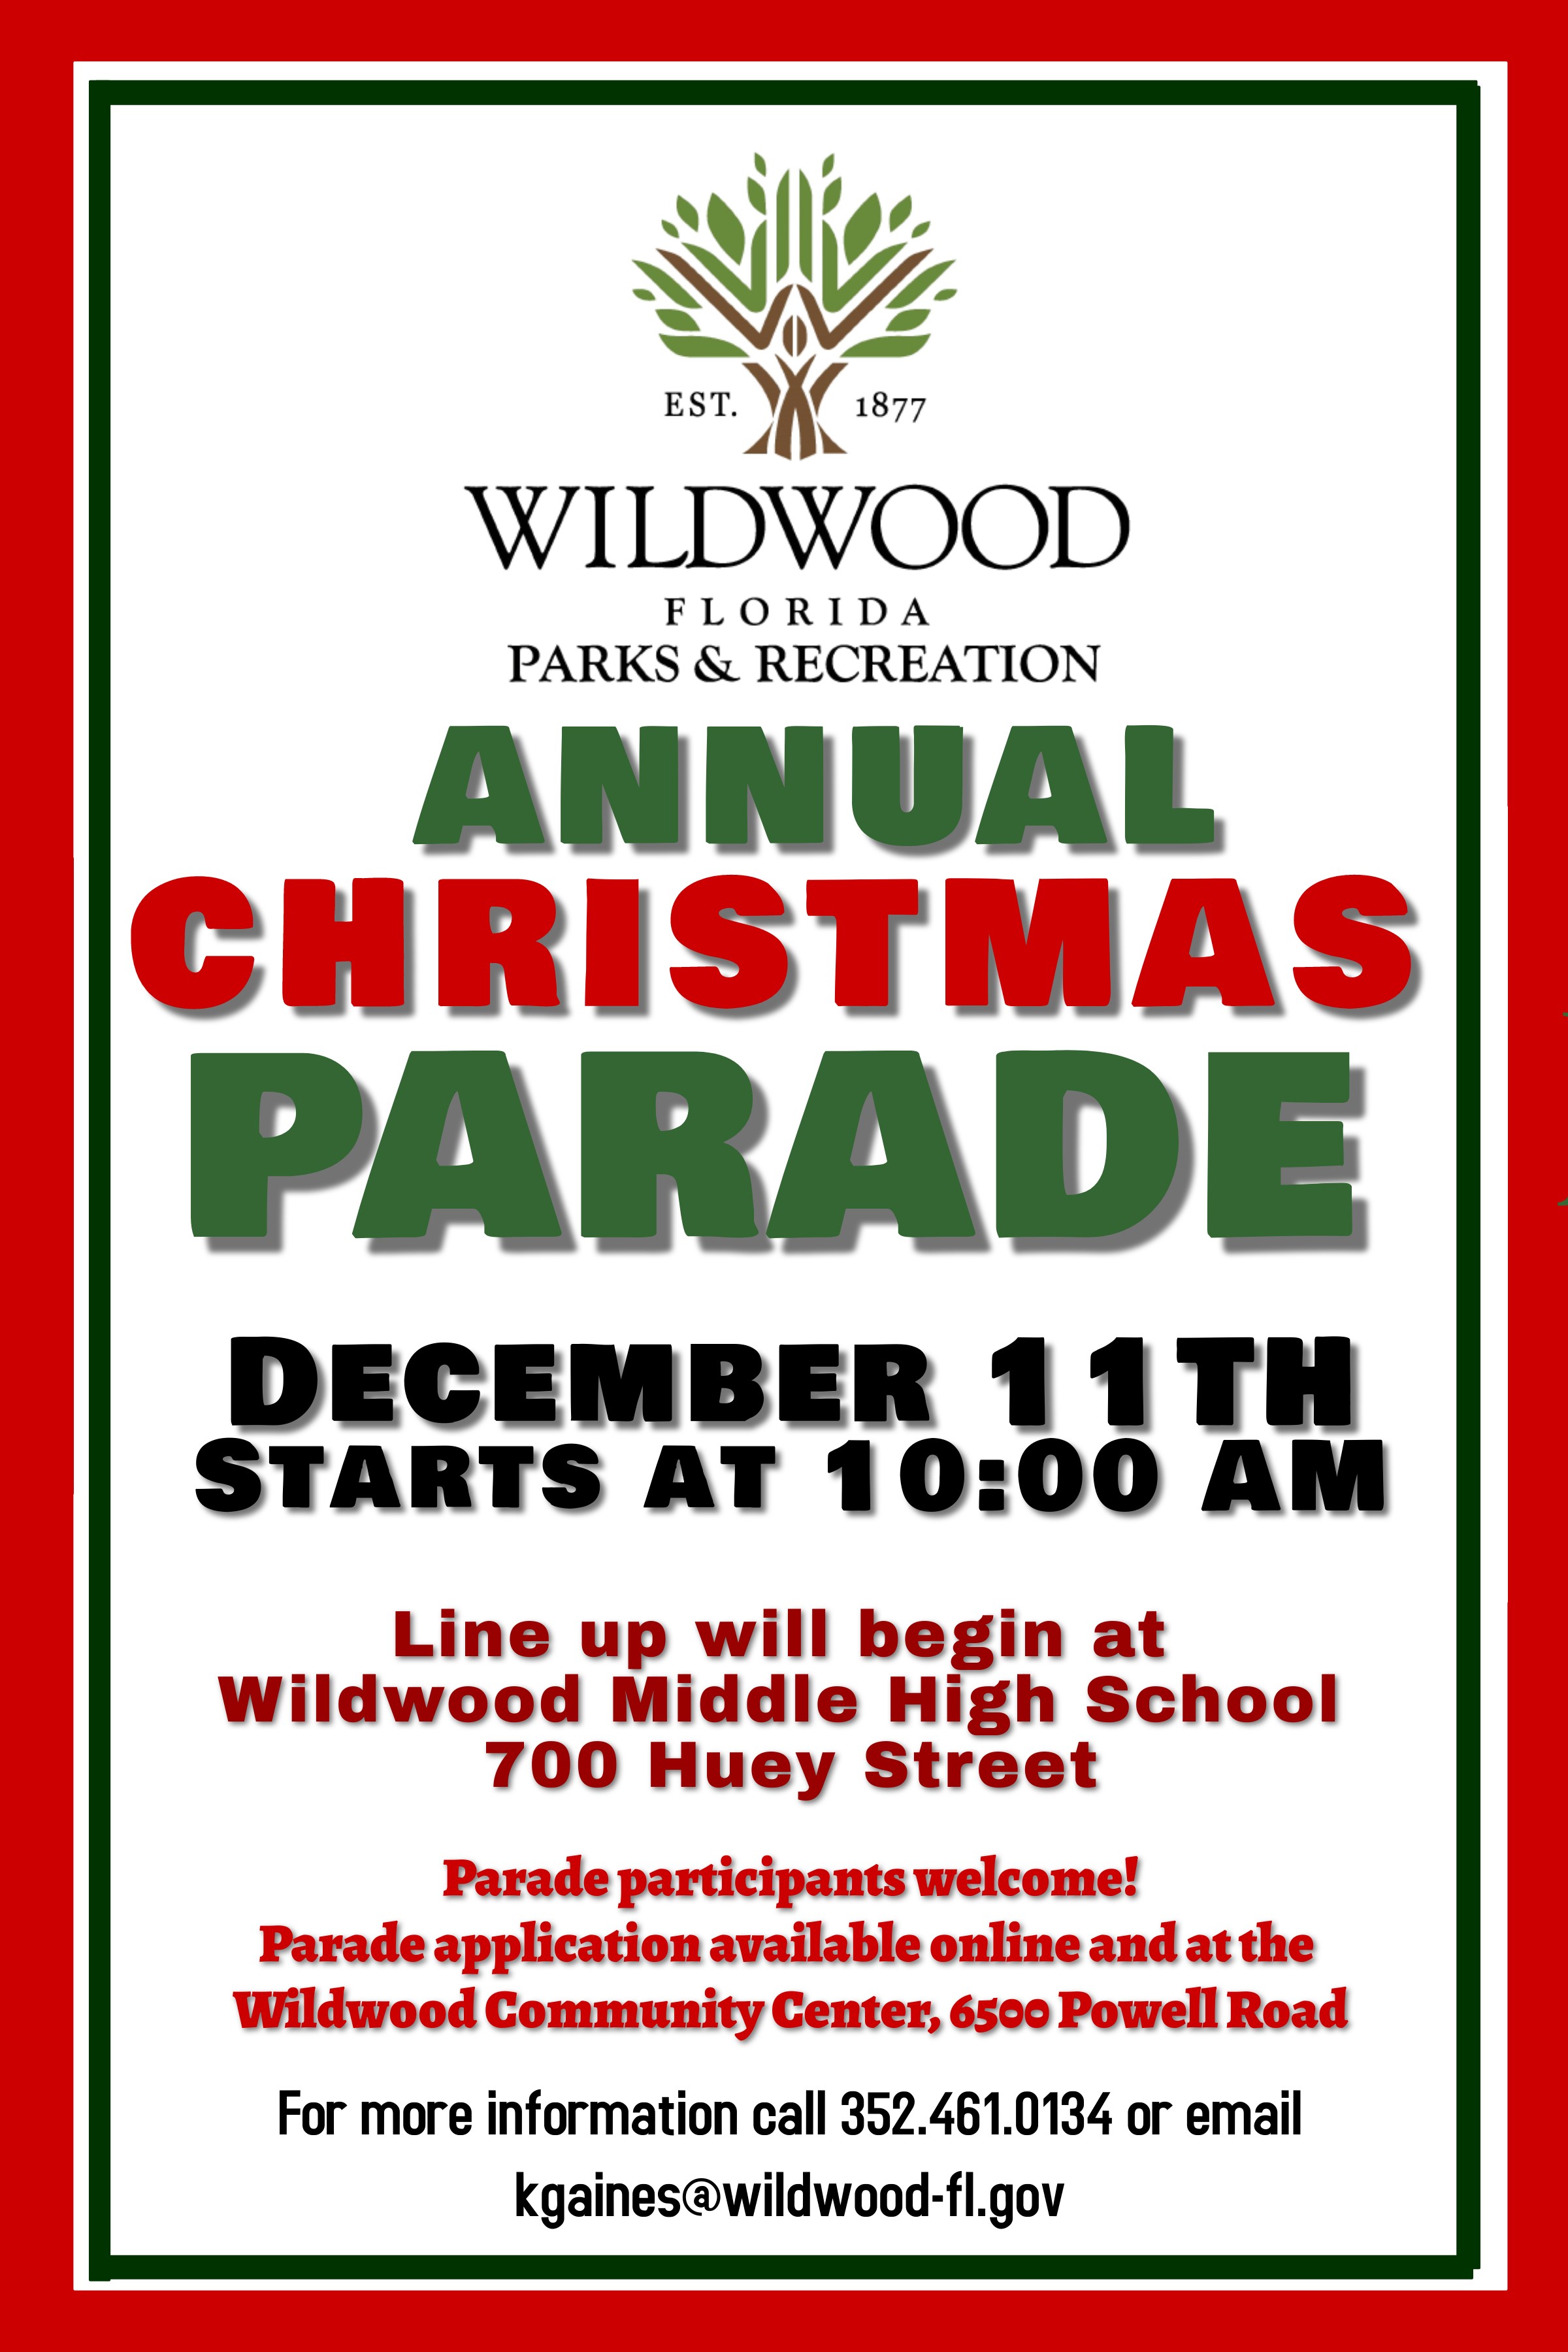 Annual Christmas Parade Wildwood Florida